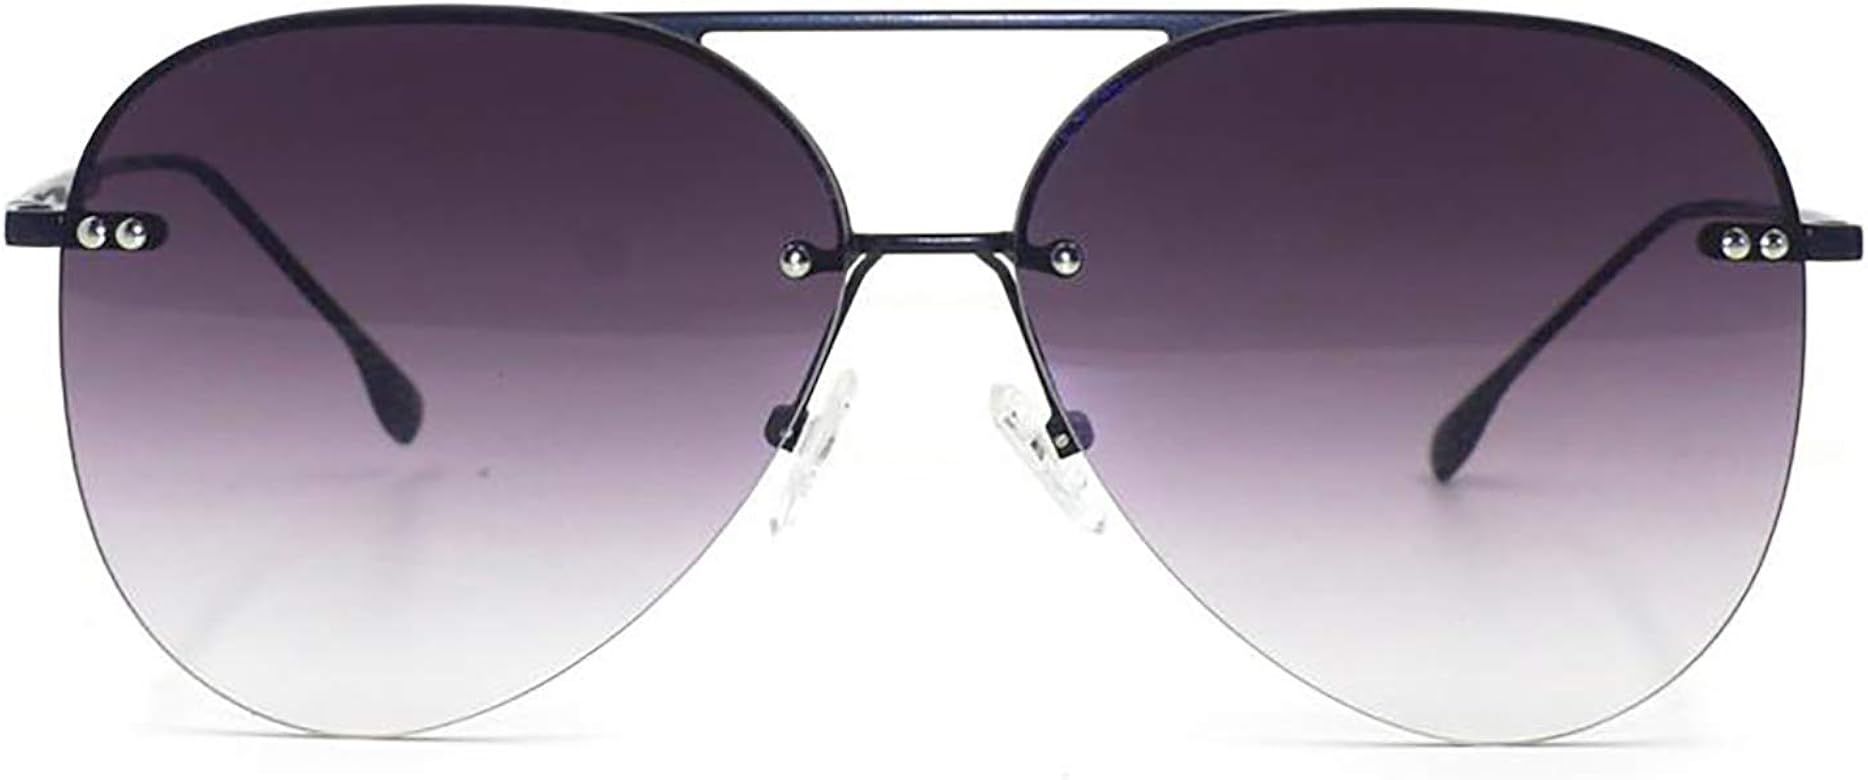 TopFoxx Megan 2 Sunglasses in Black Fade - Fashion Frames | Amazon (US)